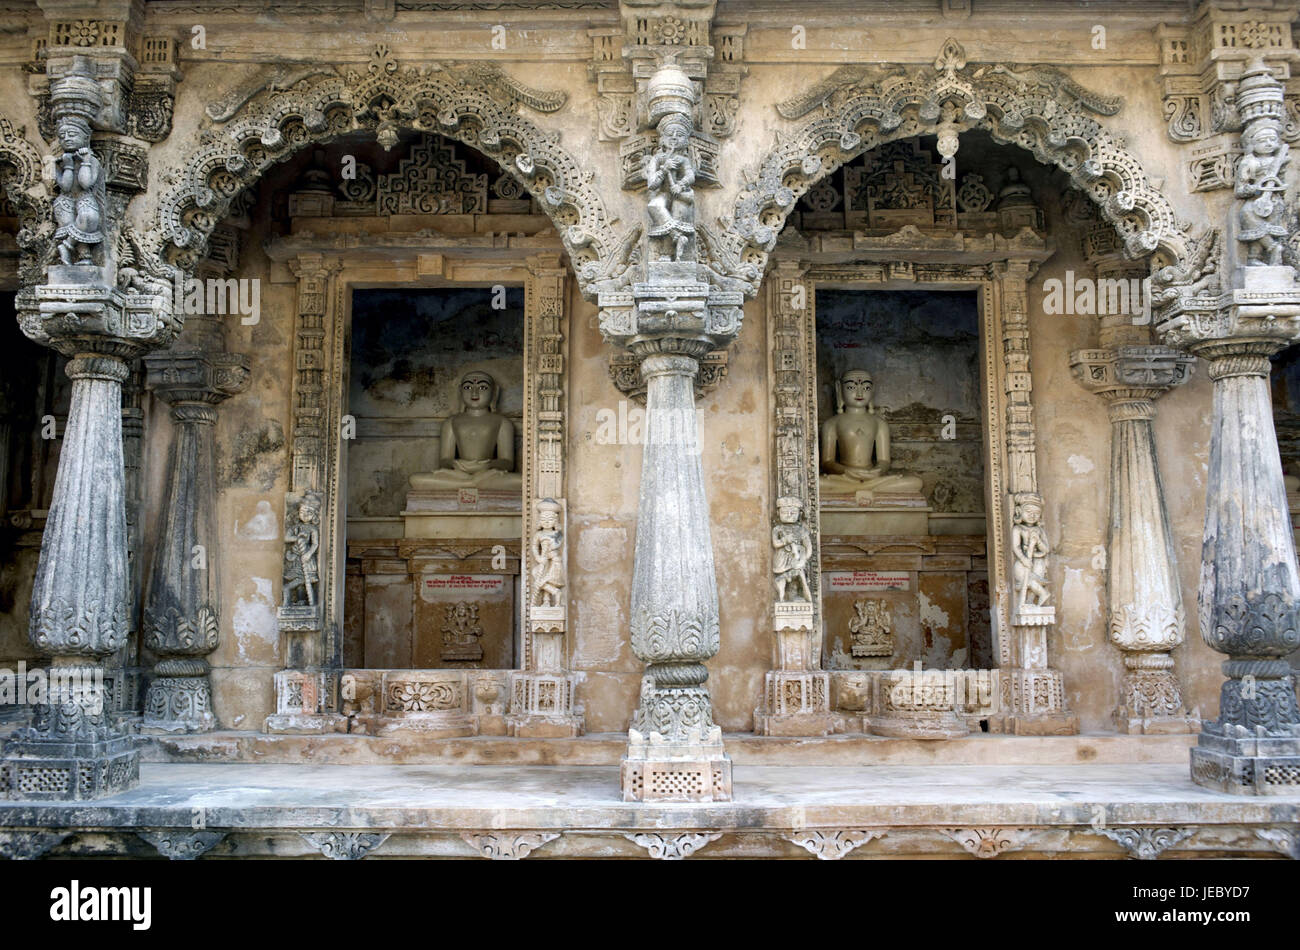 India, Gujarat, Palitana, tempio Jain in montagna Shatrunjaya, colonne e sculture, Foto Stock